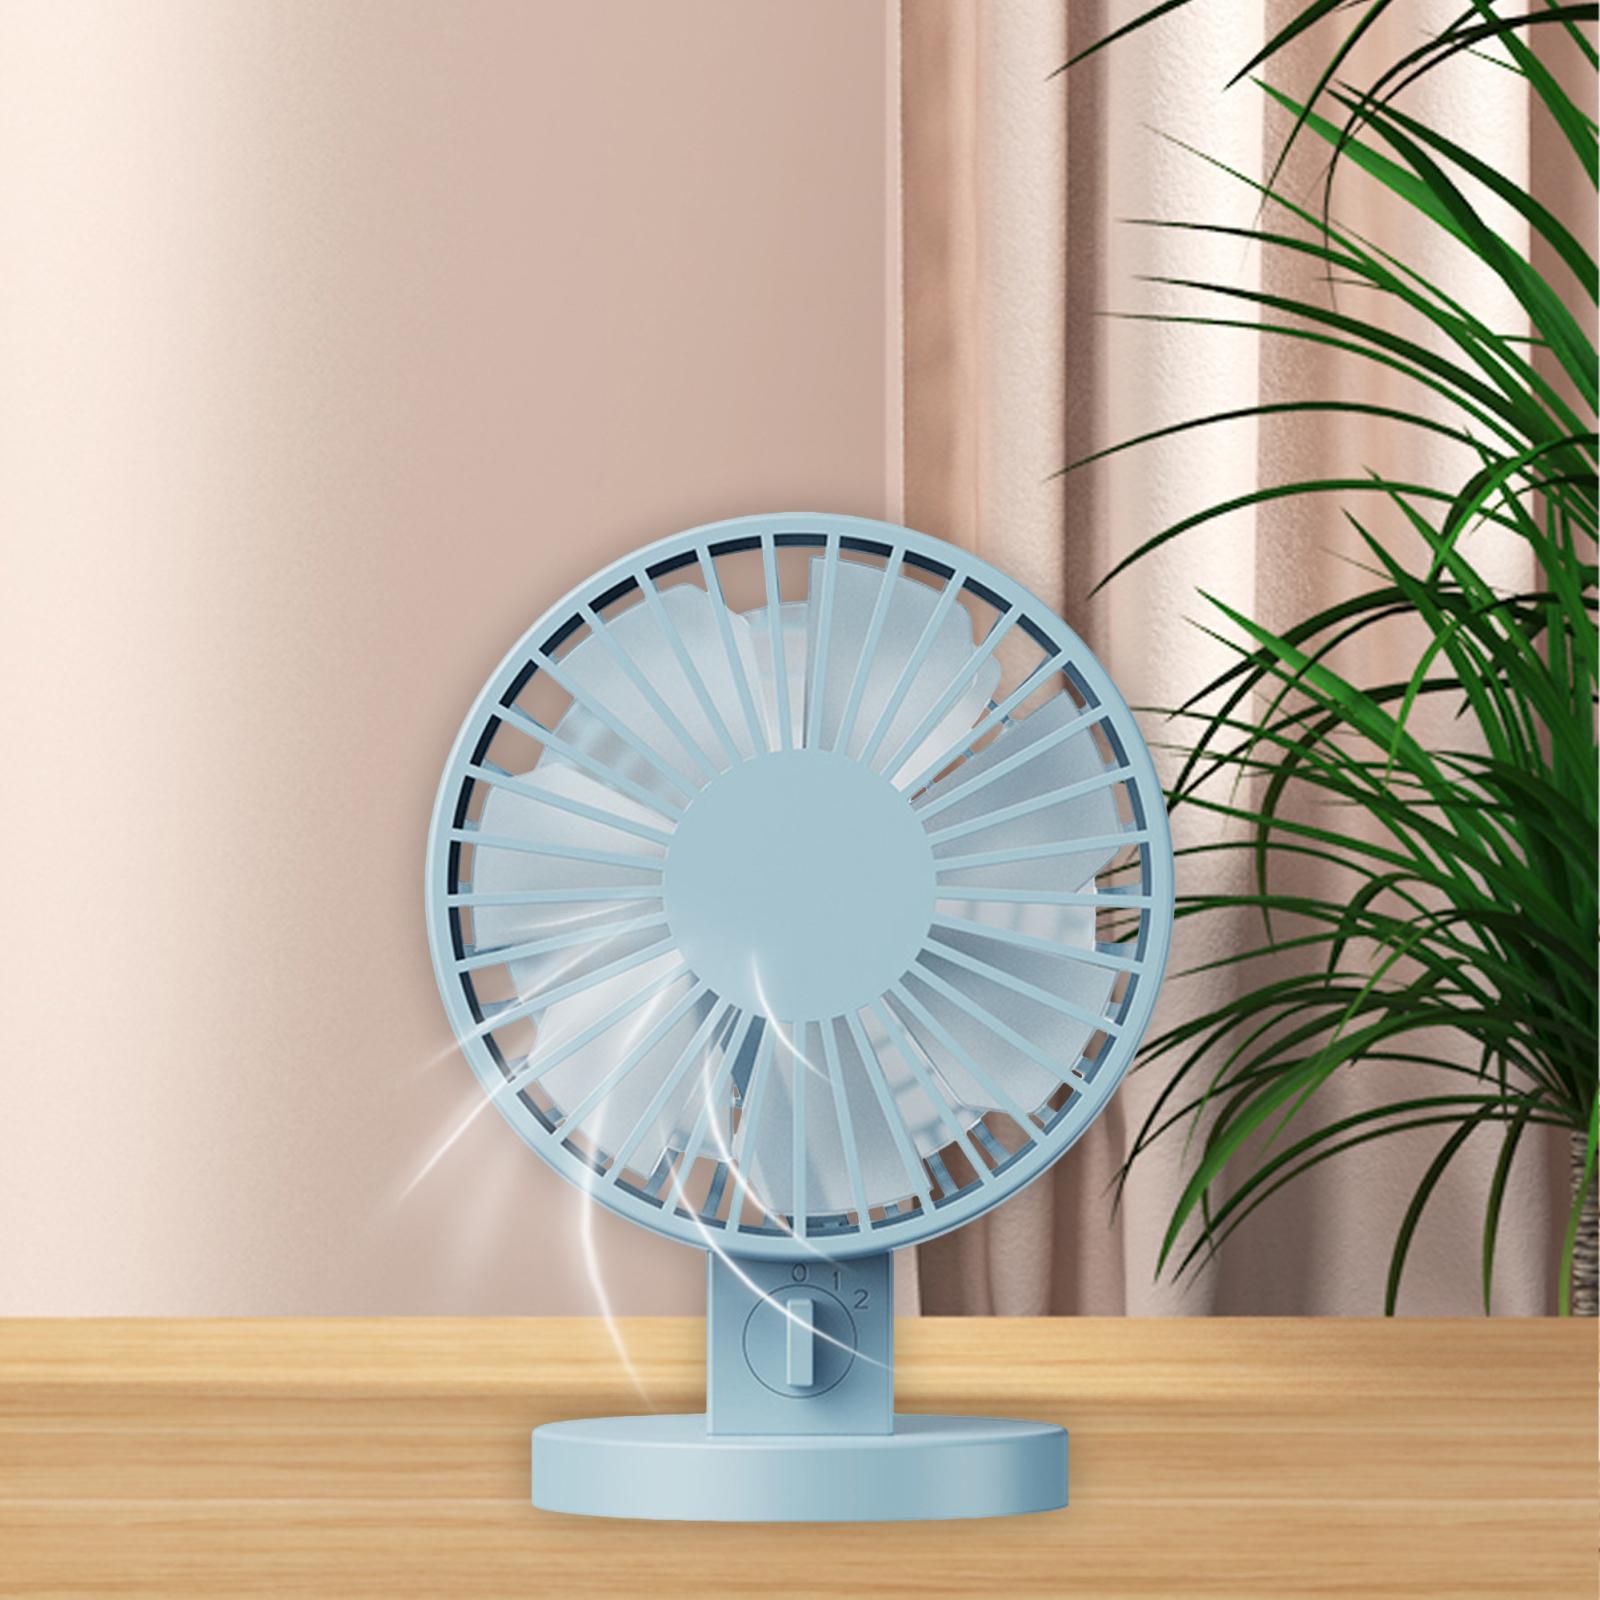 Small USB Desktop Fan Cooling Fan Height 13.5cm for Indoor Outdoor Versatile Blue